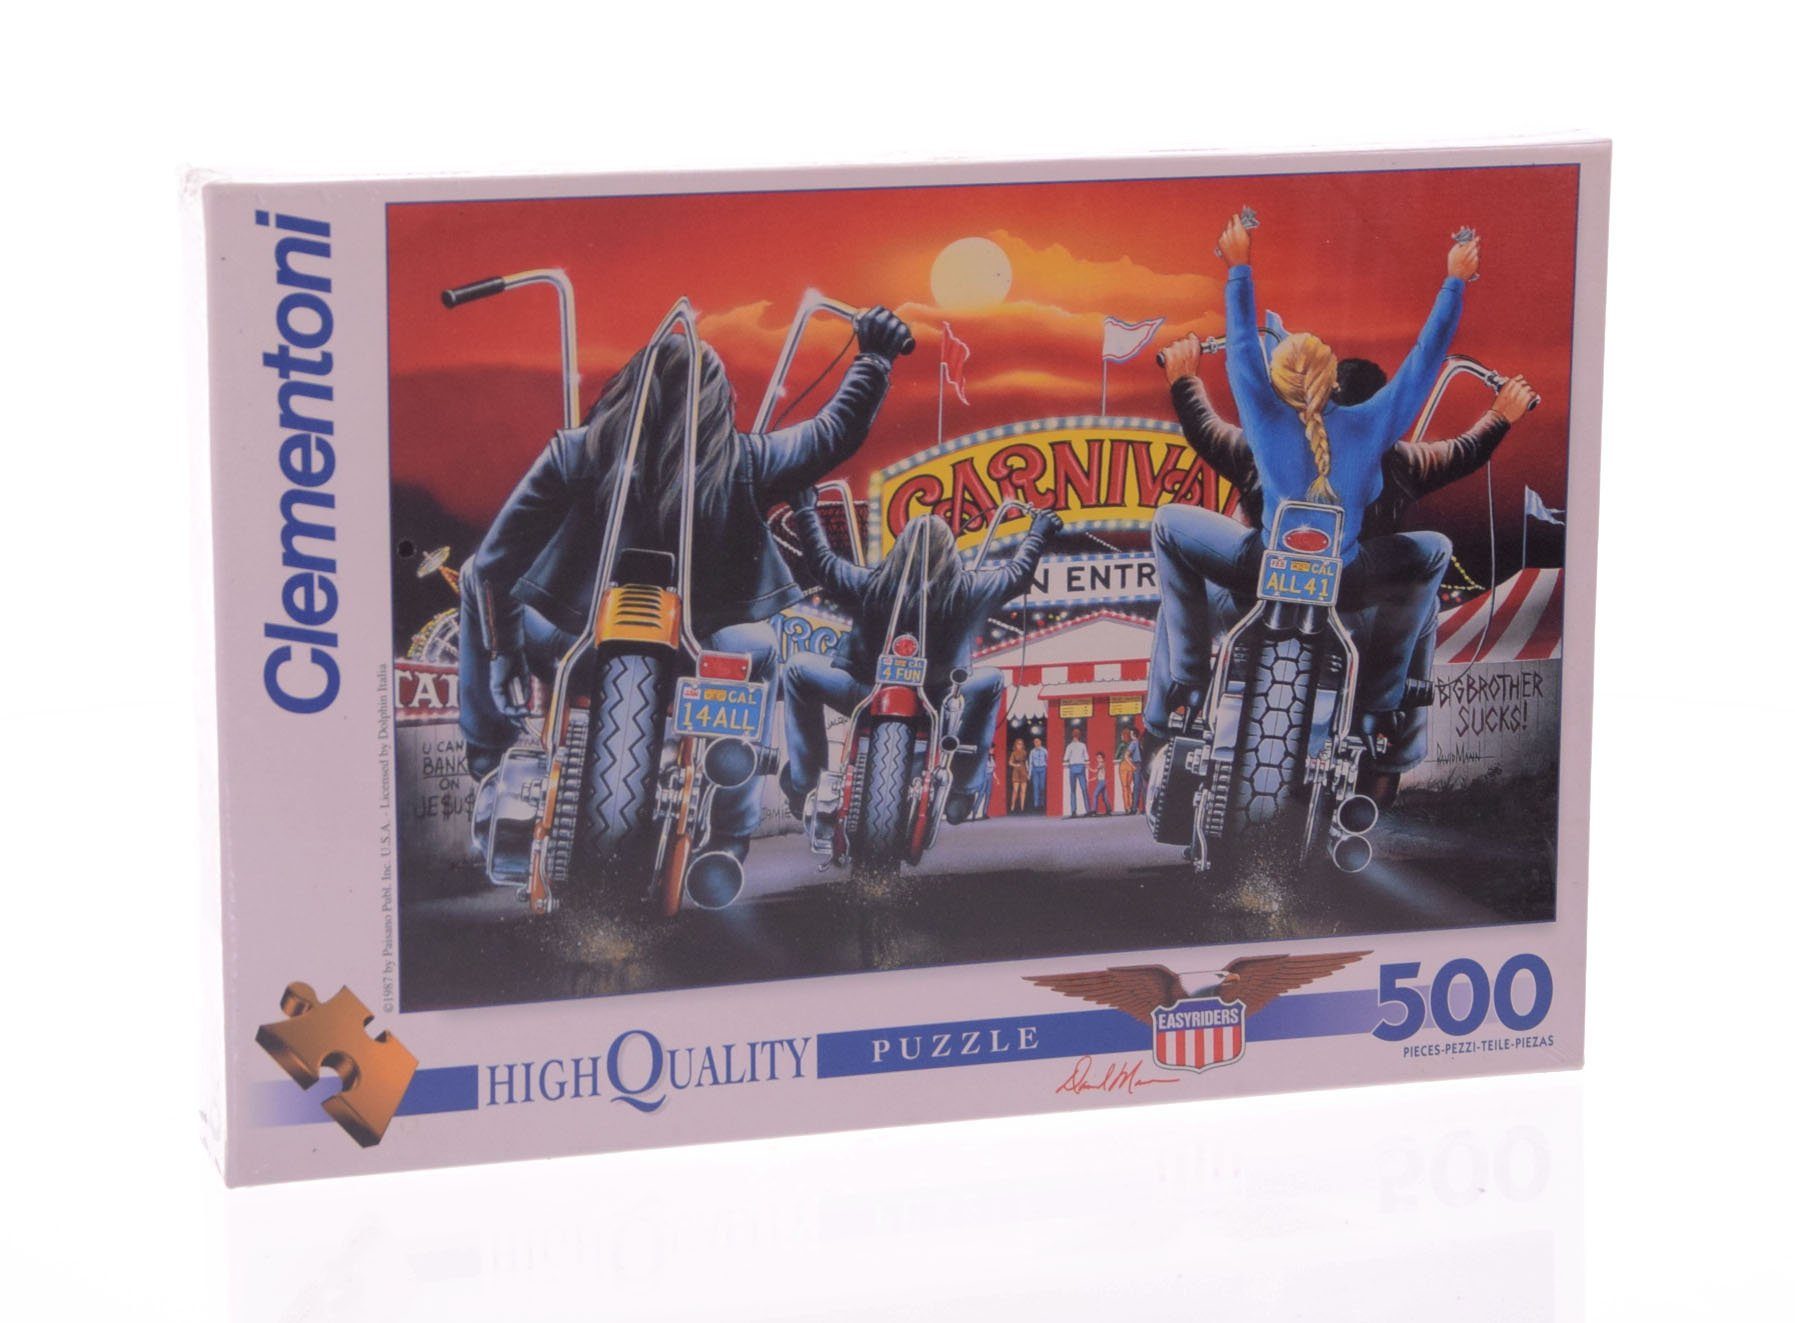 High Collection 500 500 Clementoni® Puzzleteile Carnival" "HD Quality Clementoni Teile, Puzzle Puzzle